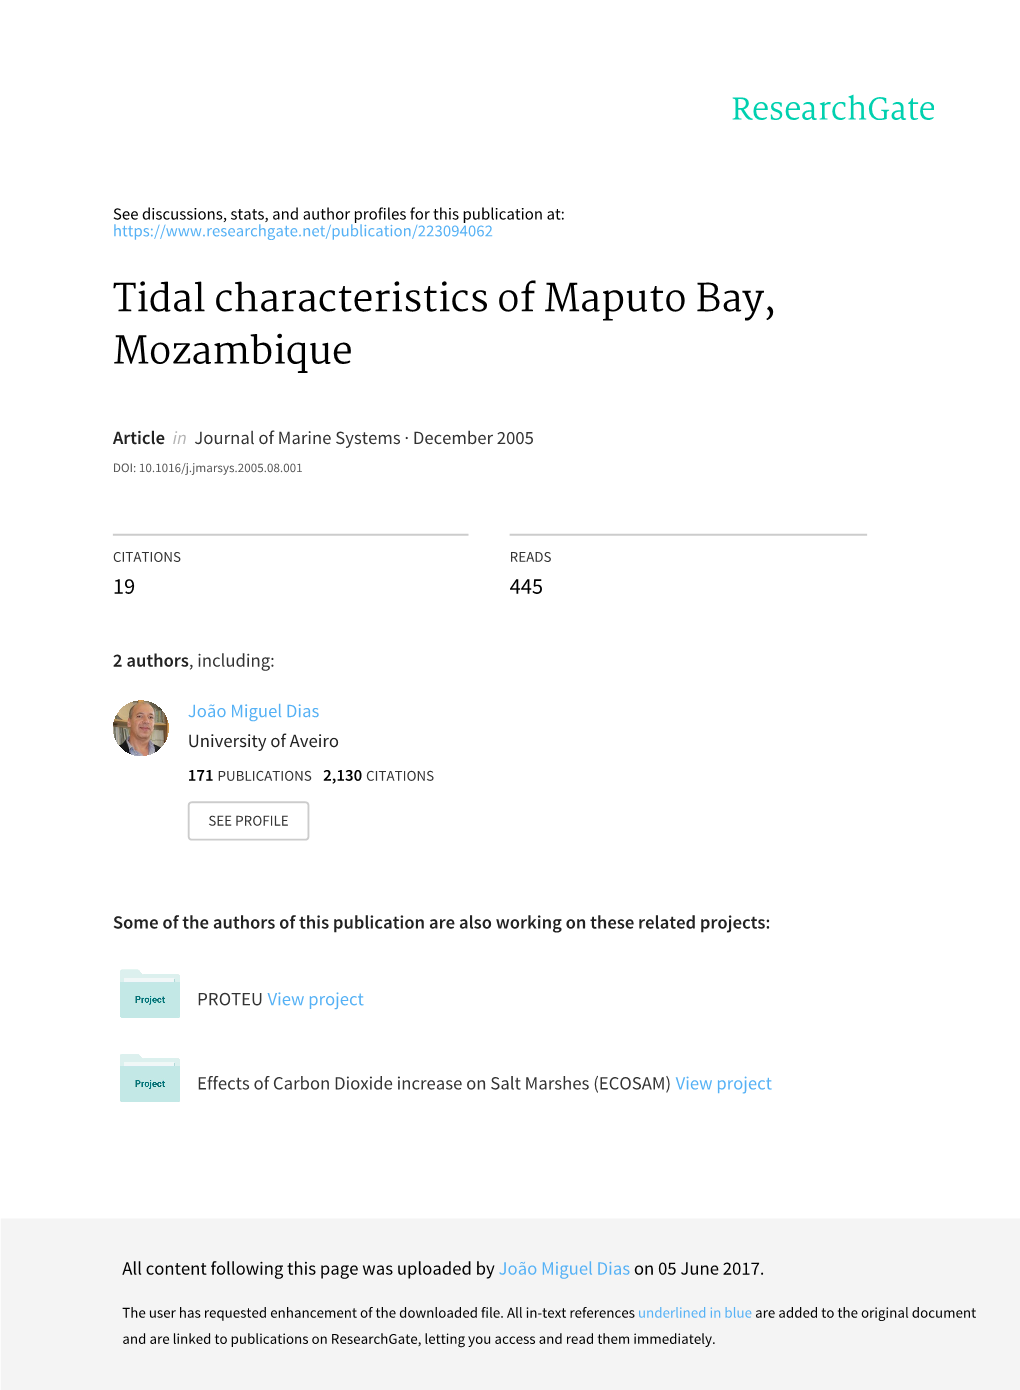 Tidal Characteristics of Maputo Bay, Mozambique